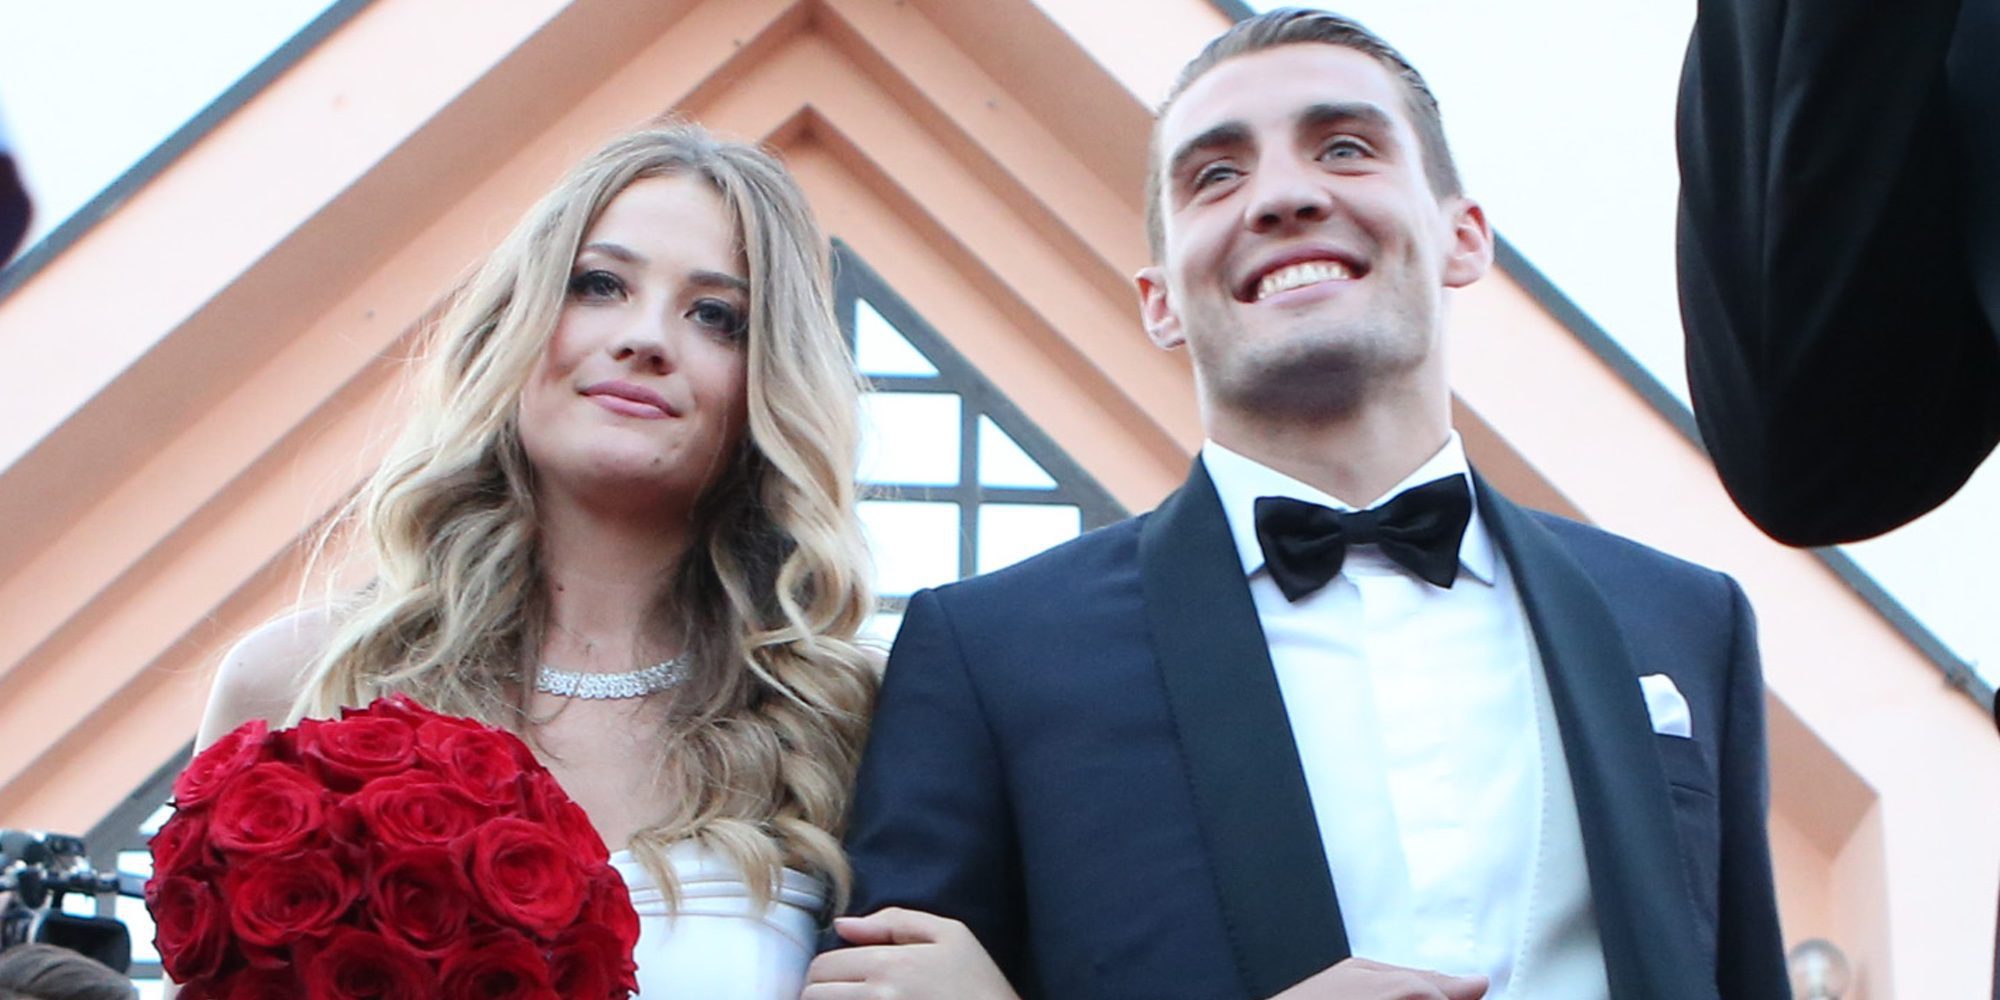 Así fue la boda croata de Mateo Kovacic e Izabel Andrijanic